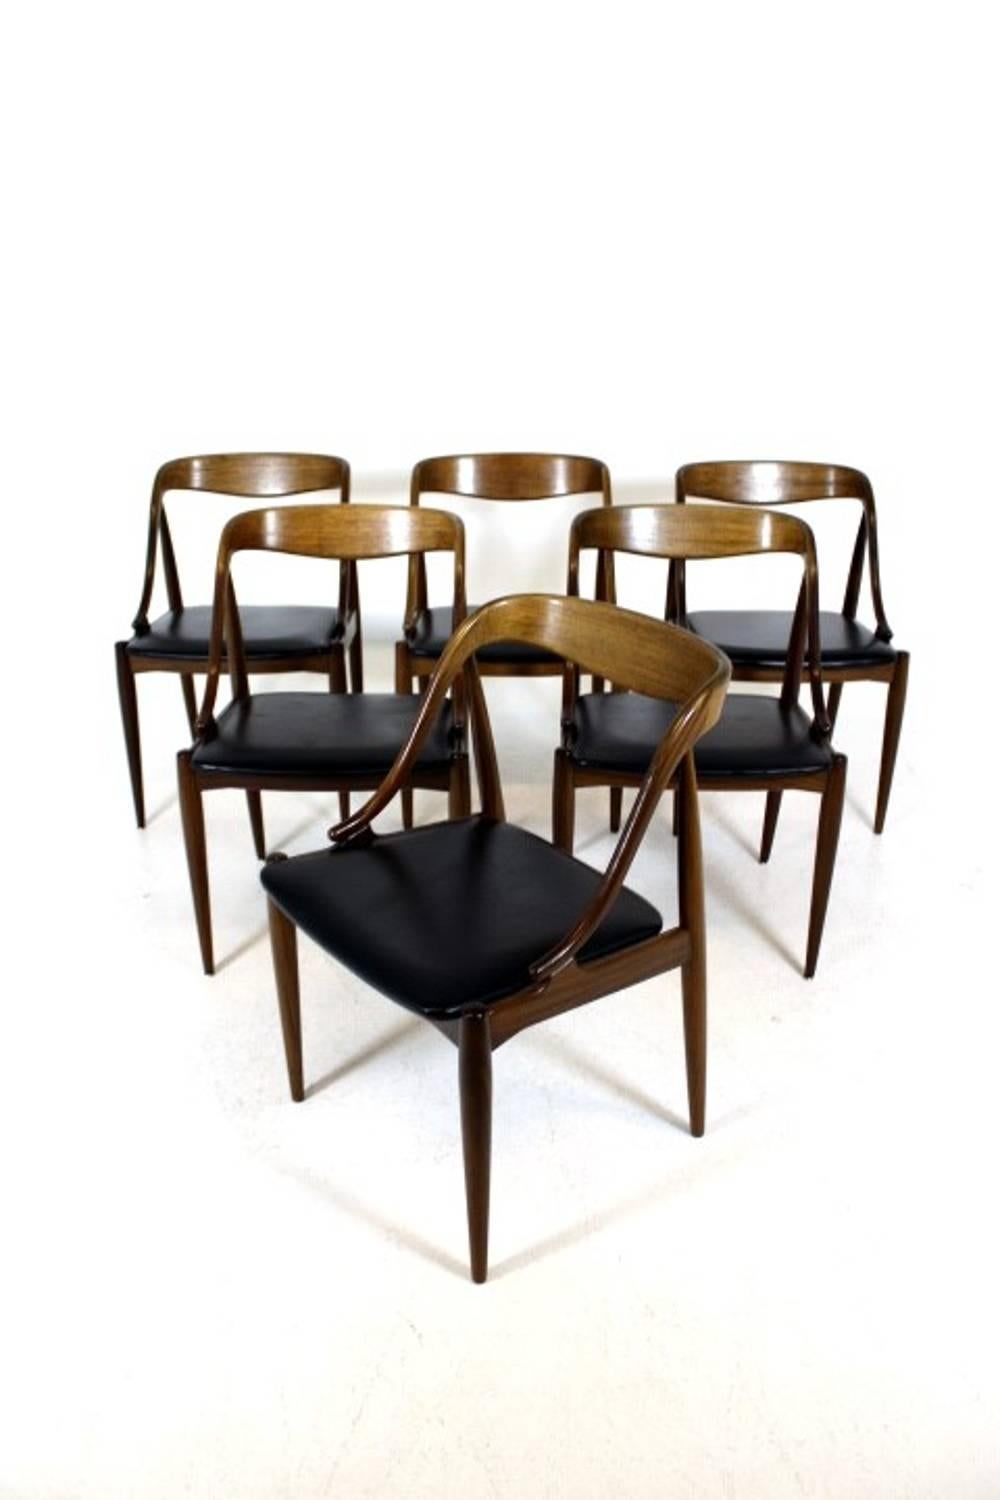 Scandinavian Modern dining set in teak by Johannes Andersen for Uldum Møbler. Chairs withe seats in original vinyl.
Measures: Table W 170+72.5, 242.5 cm, D 89.5 cm, H 72 cm, chairs W 50 cm, D 54 cm, H 76 cm, H seat 43 cm.

 